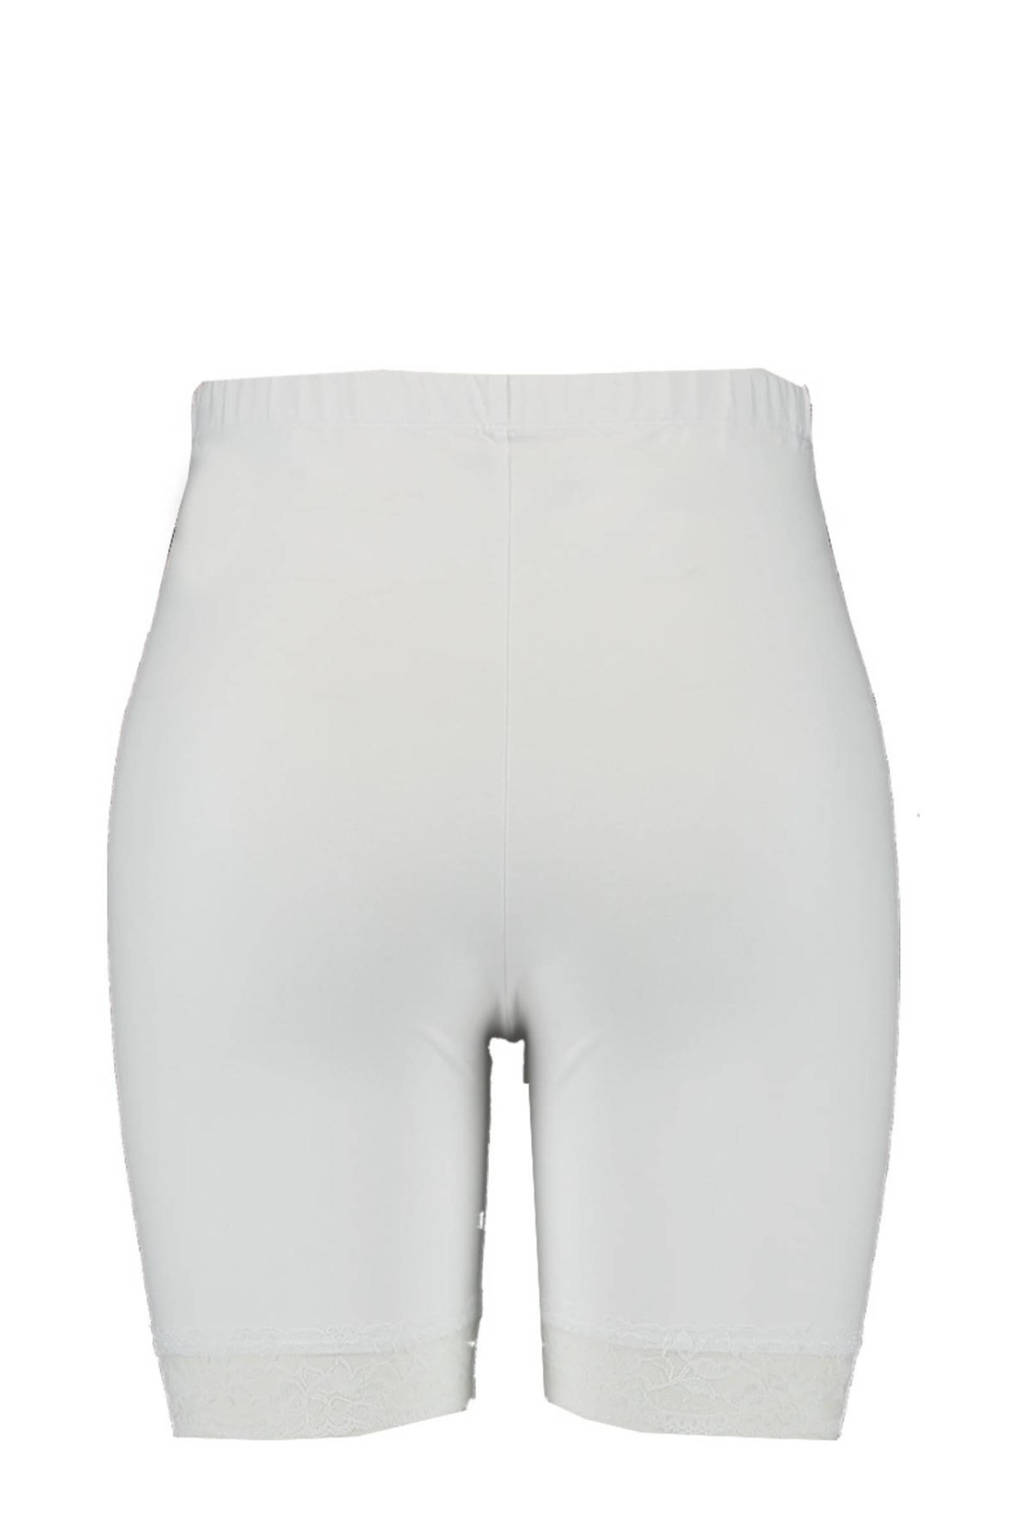 Paine Gillic gevogelte Benadering MS Mode Plus Size korte legging wit | wehkamp